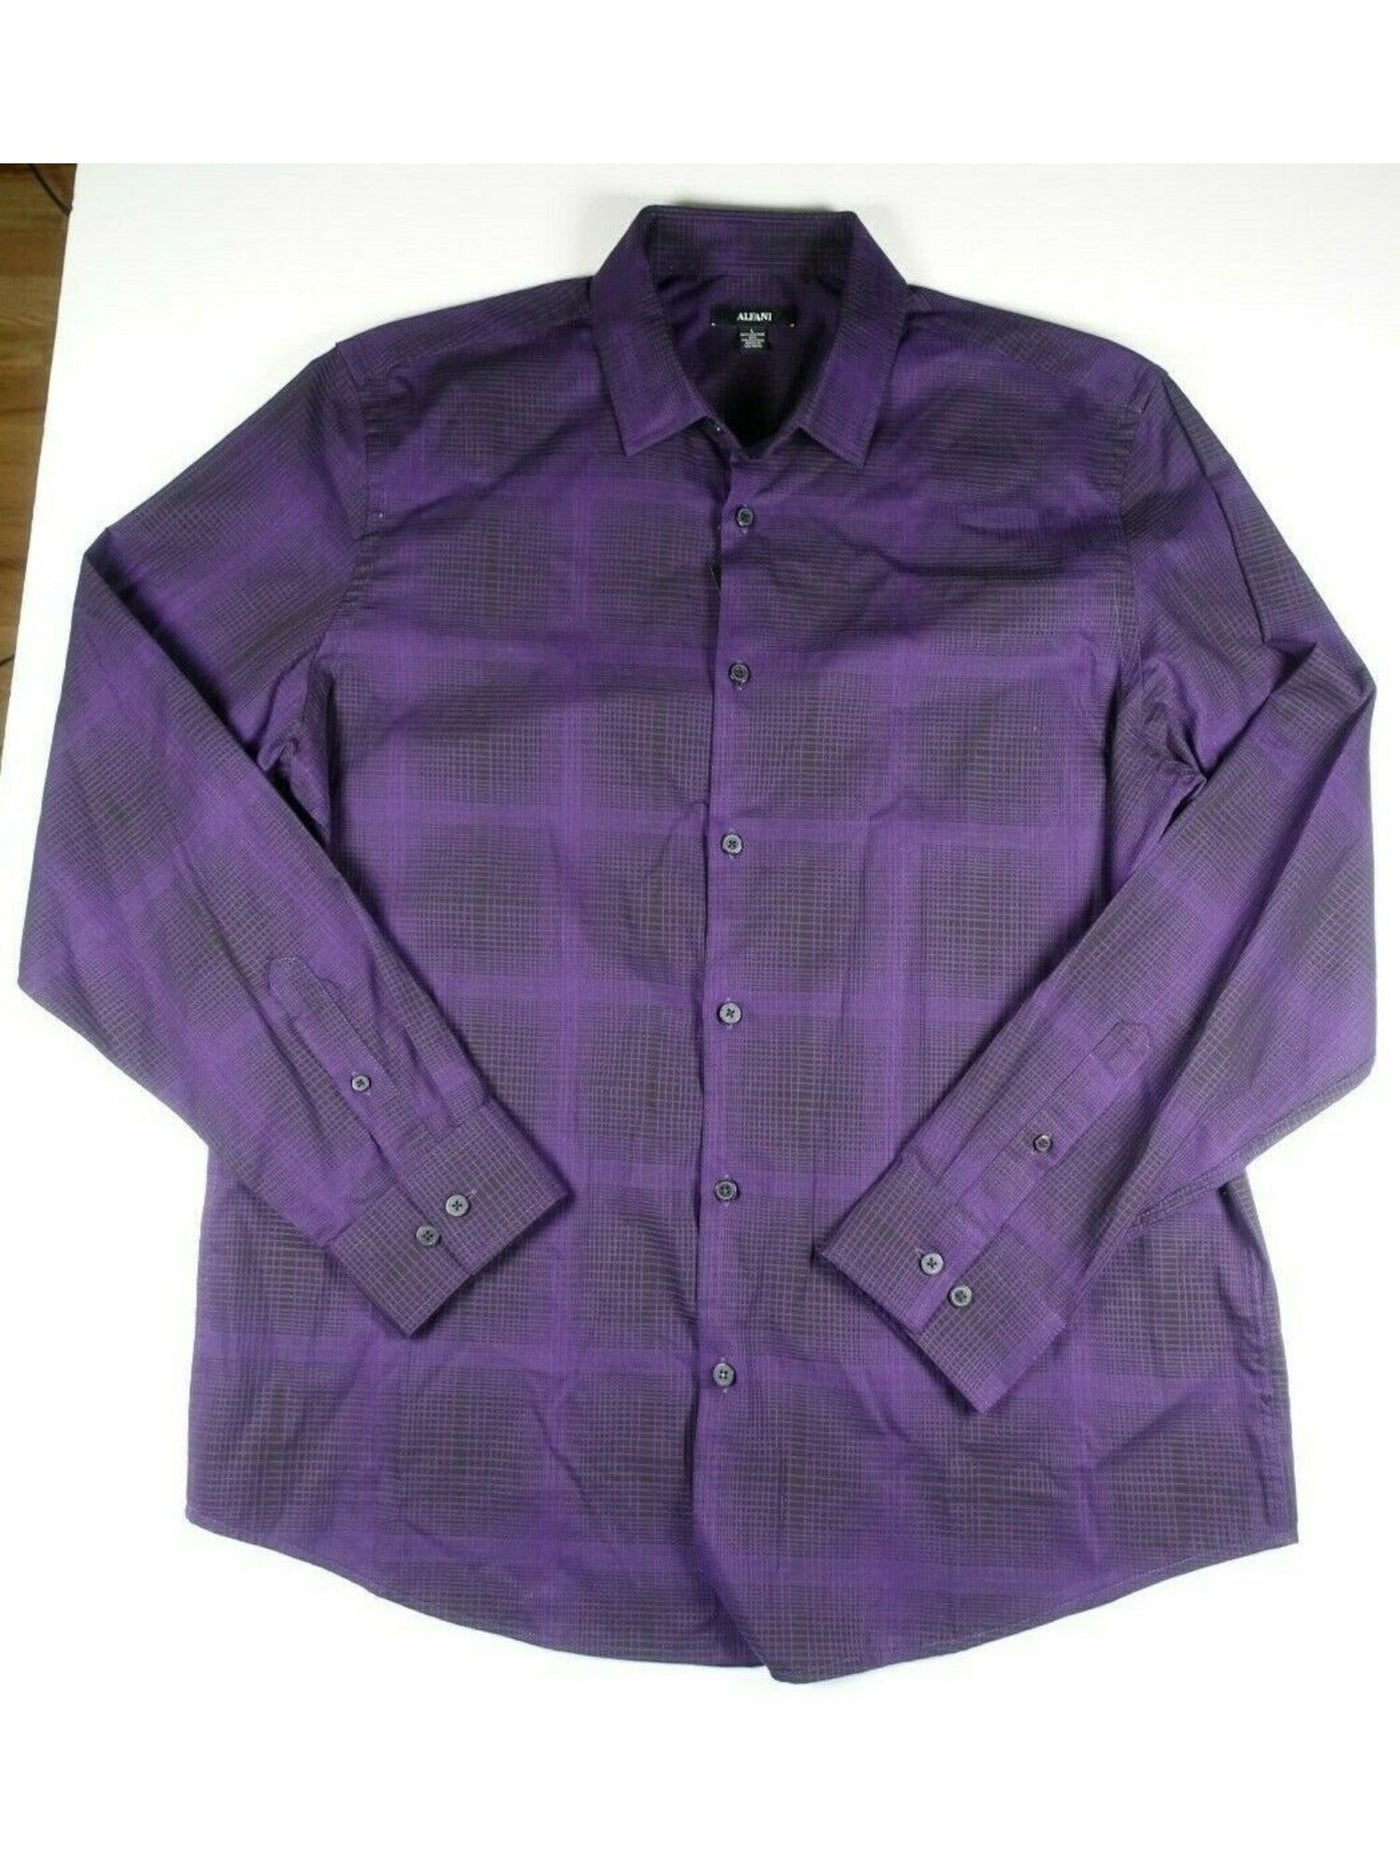 ALFANI Mens Purple Patterned Collared Dress Shirt S